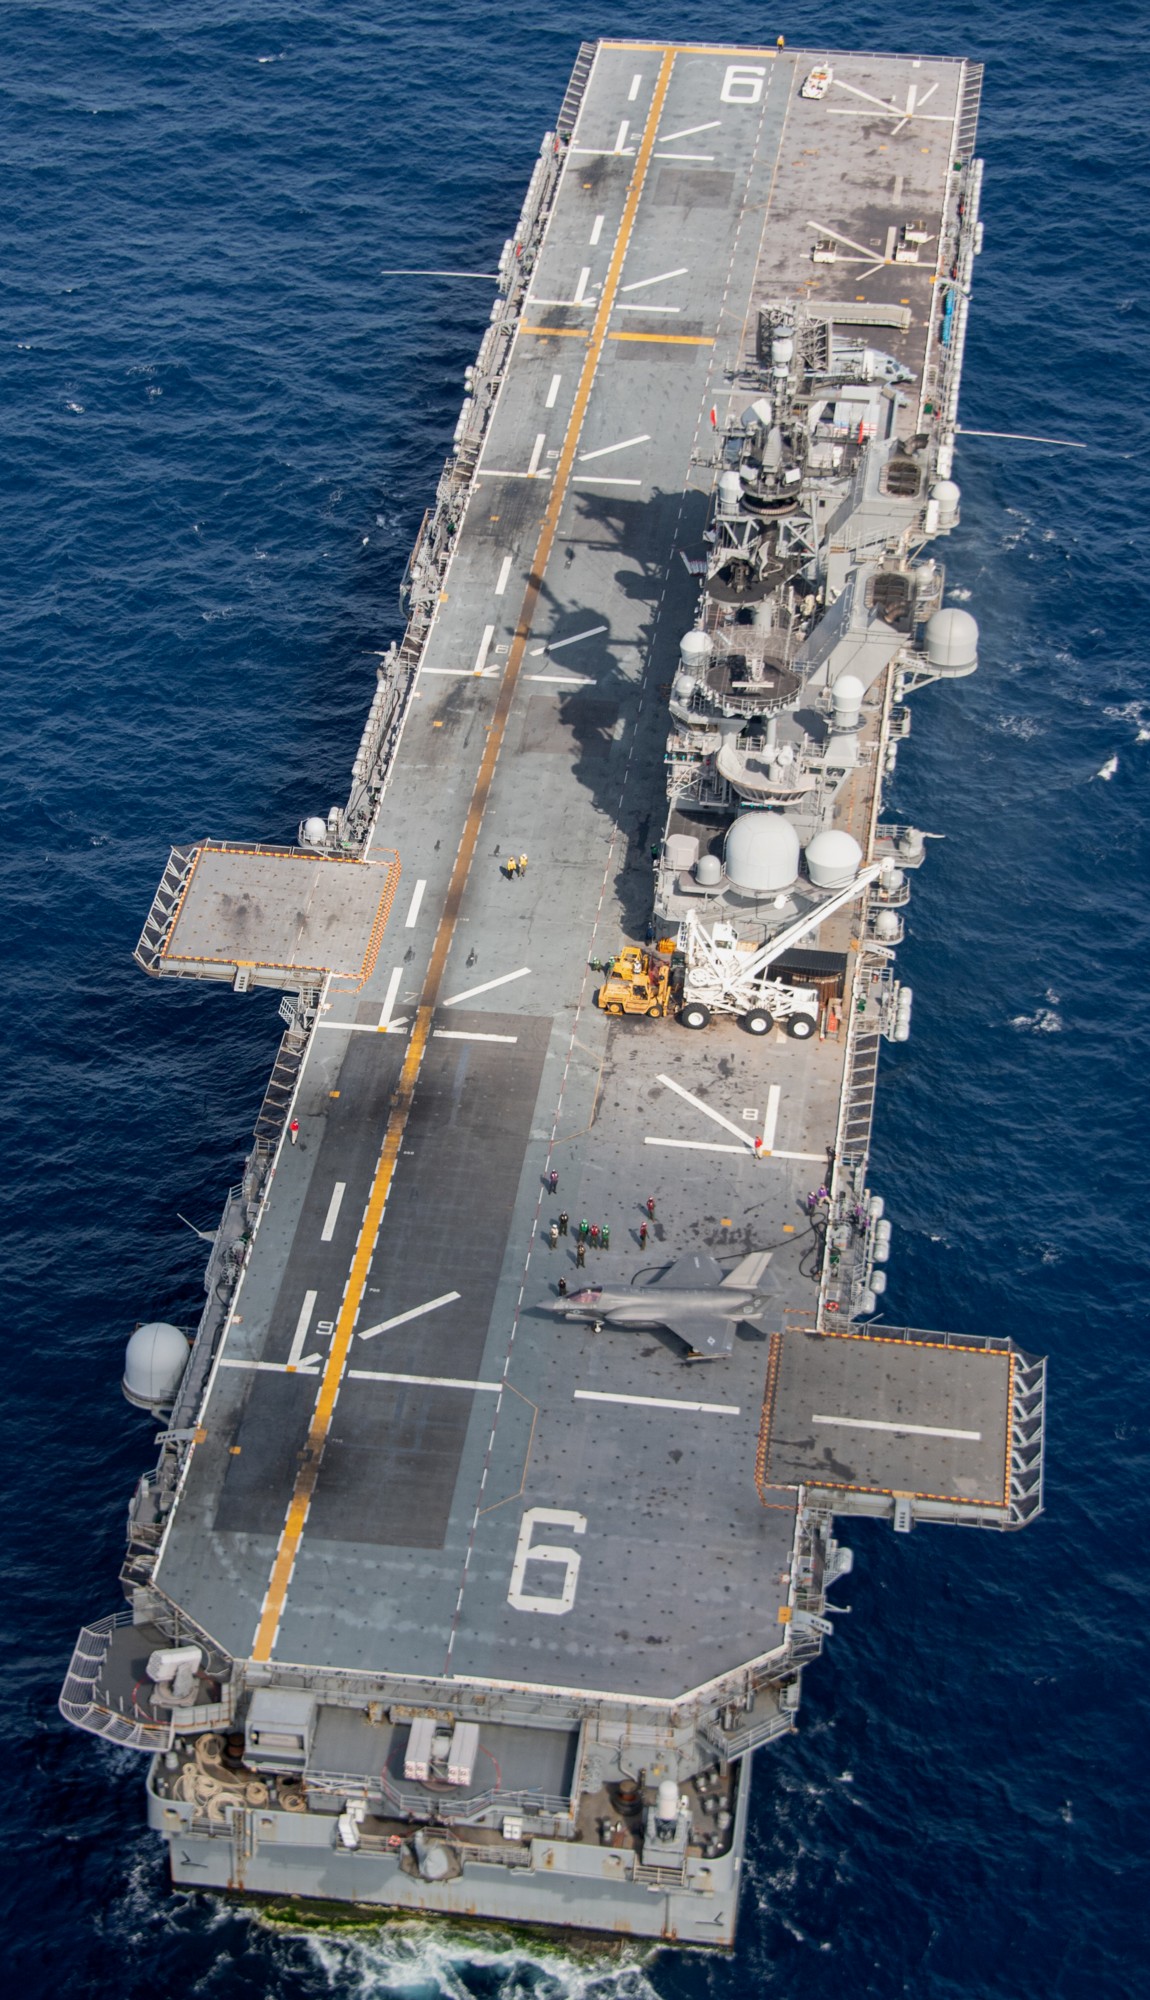 lha-6 uss america amphibious assault ship landing us navy marines 207